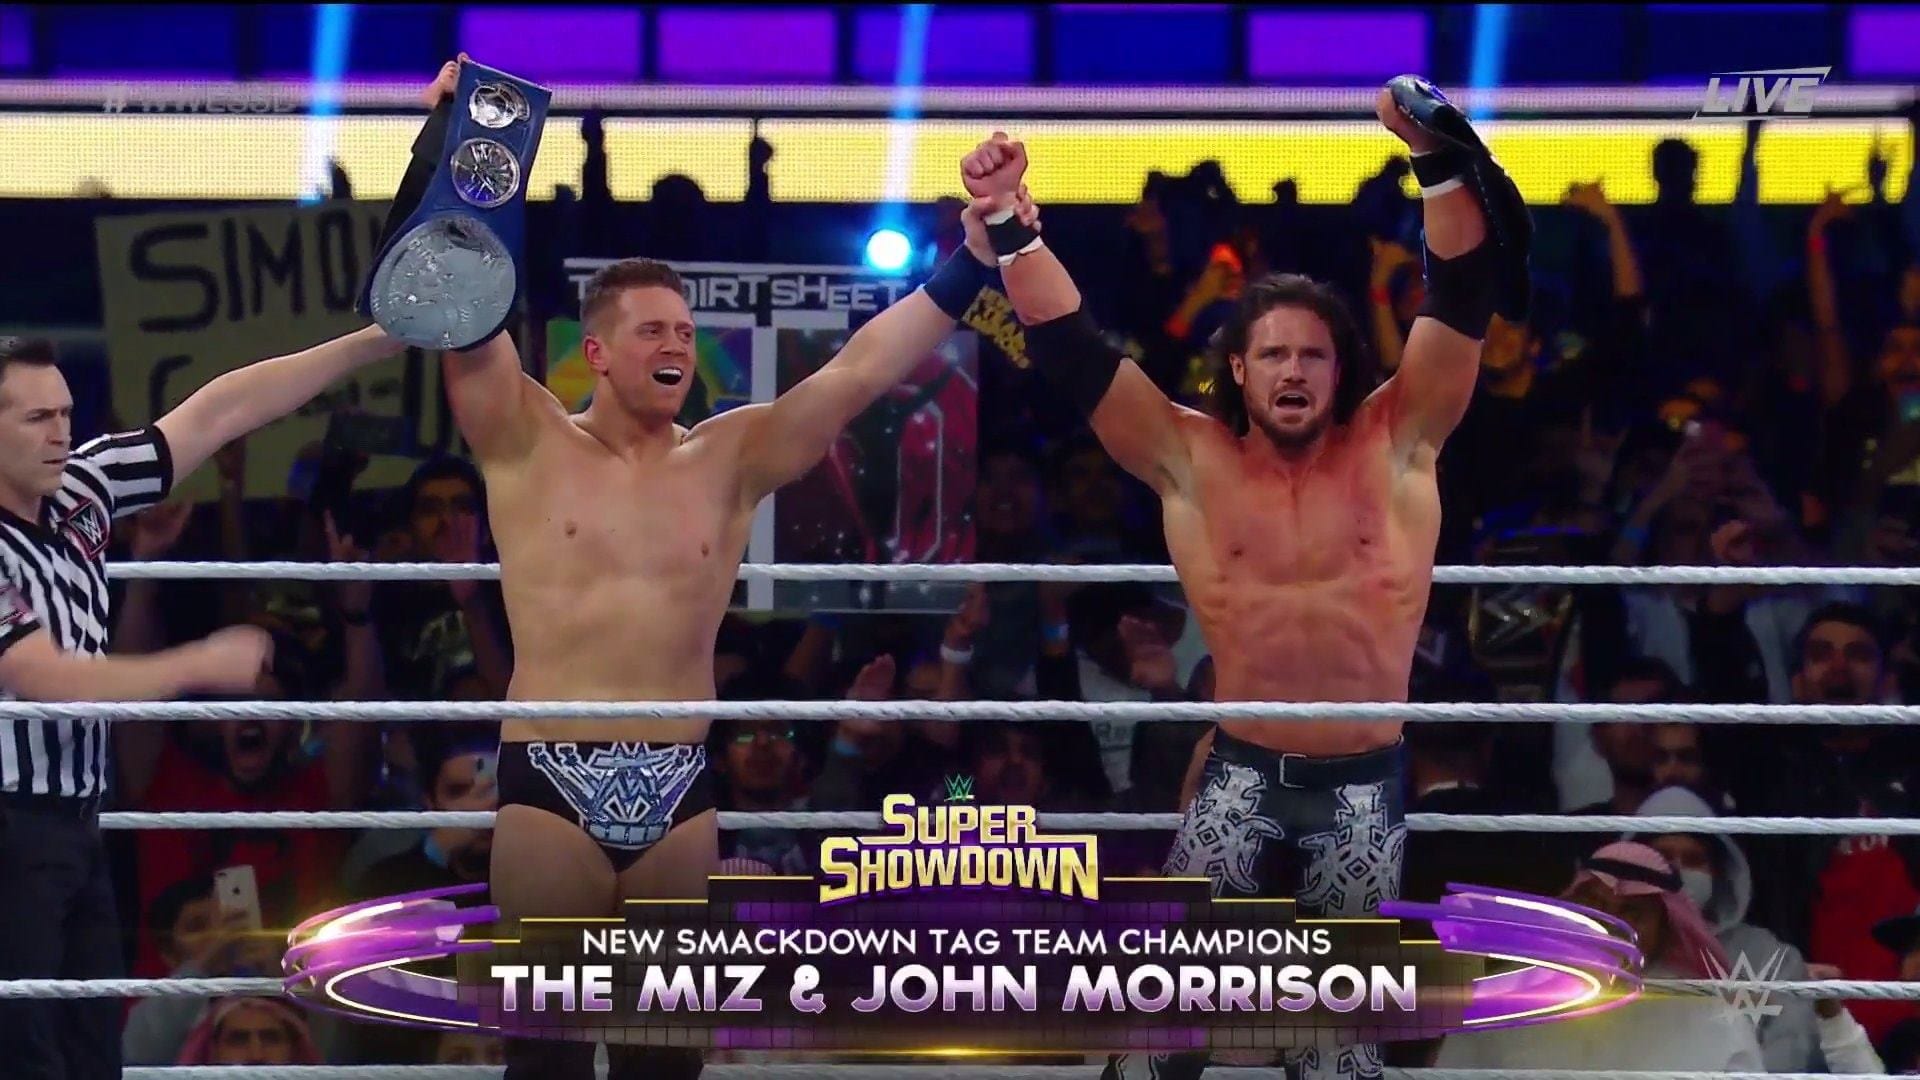 The Miz John Morrison Win SmackDown Tag Team Championship At WWE Super ShowDown 2020